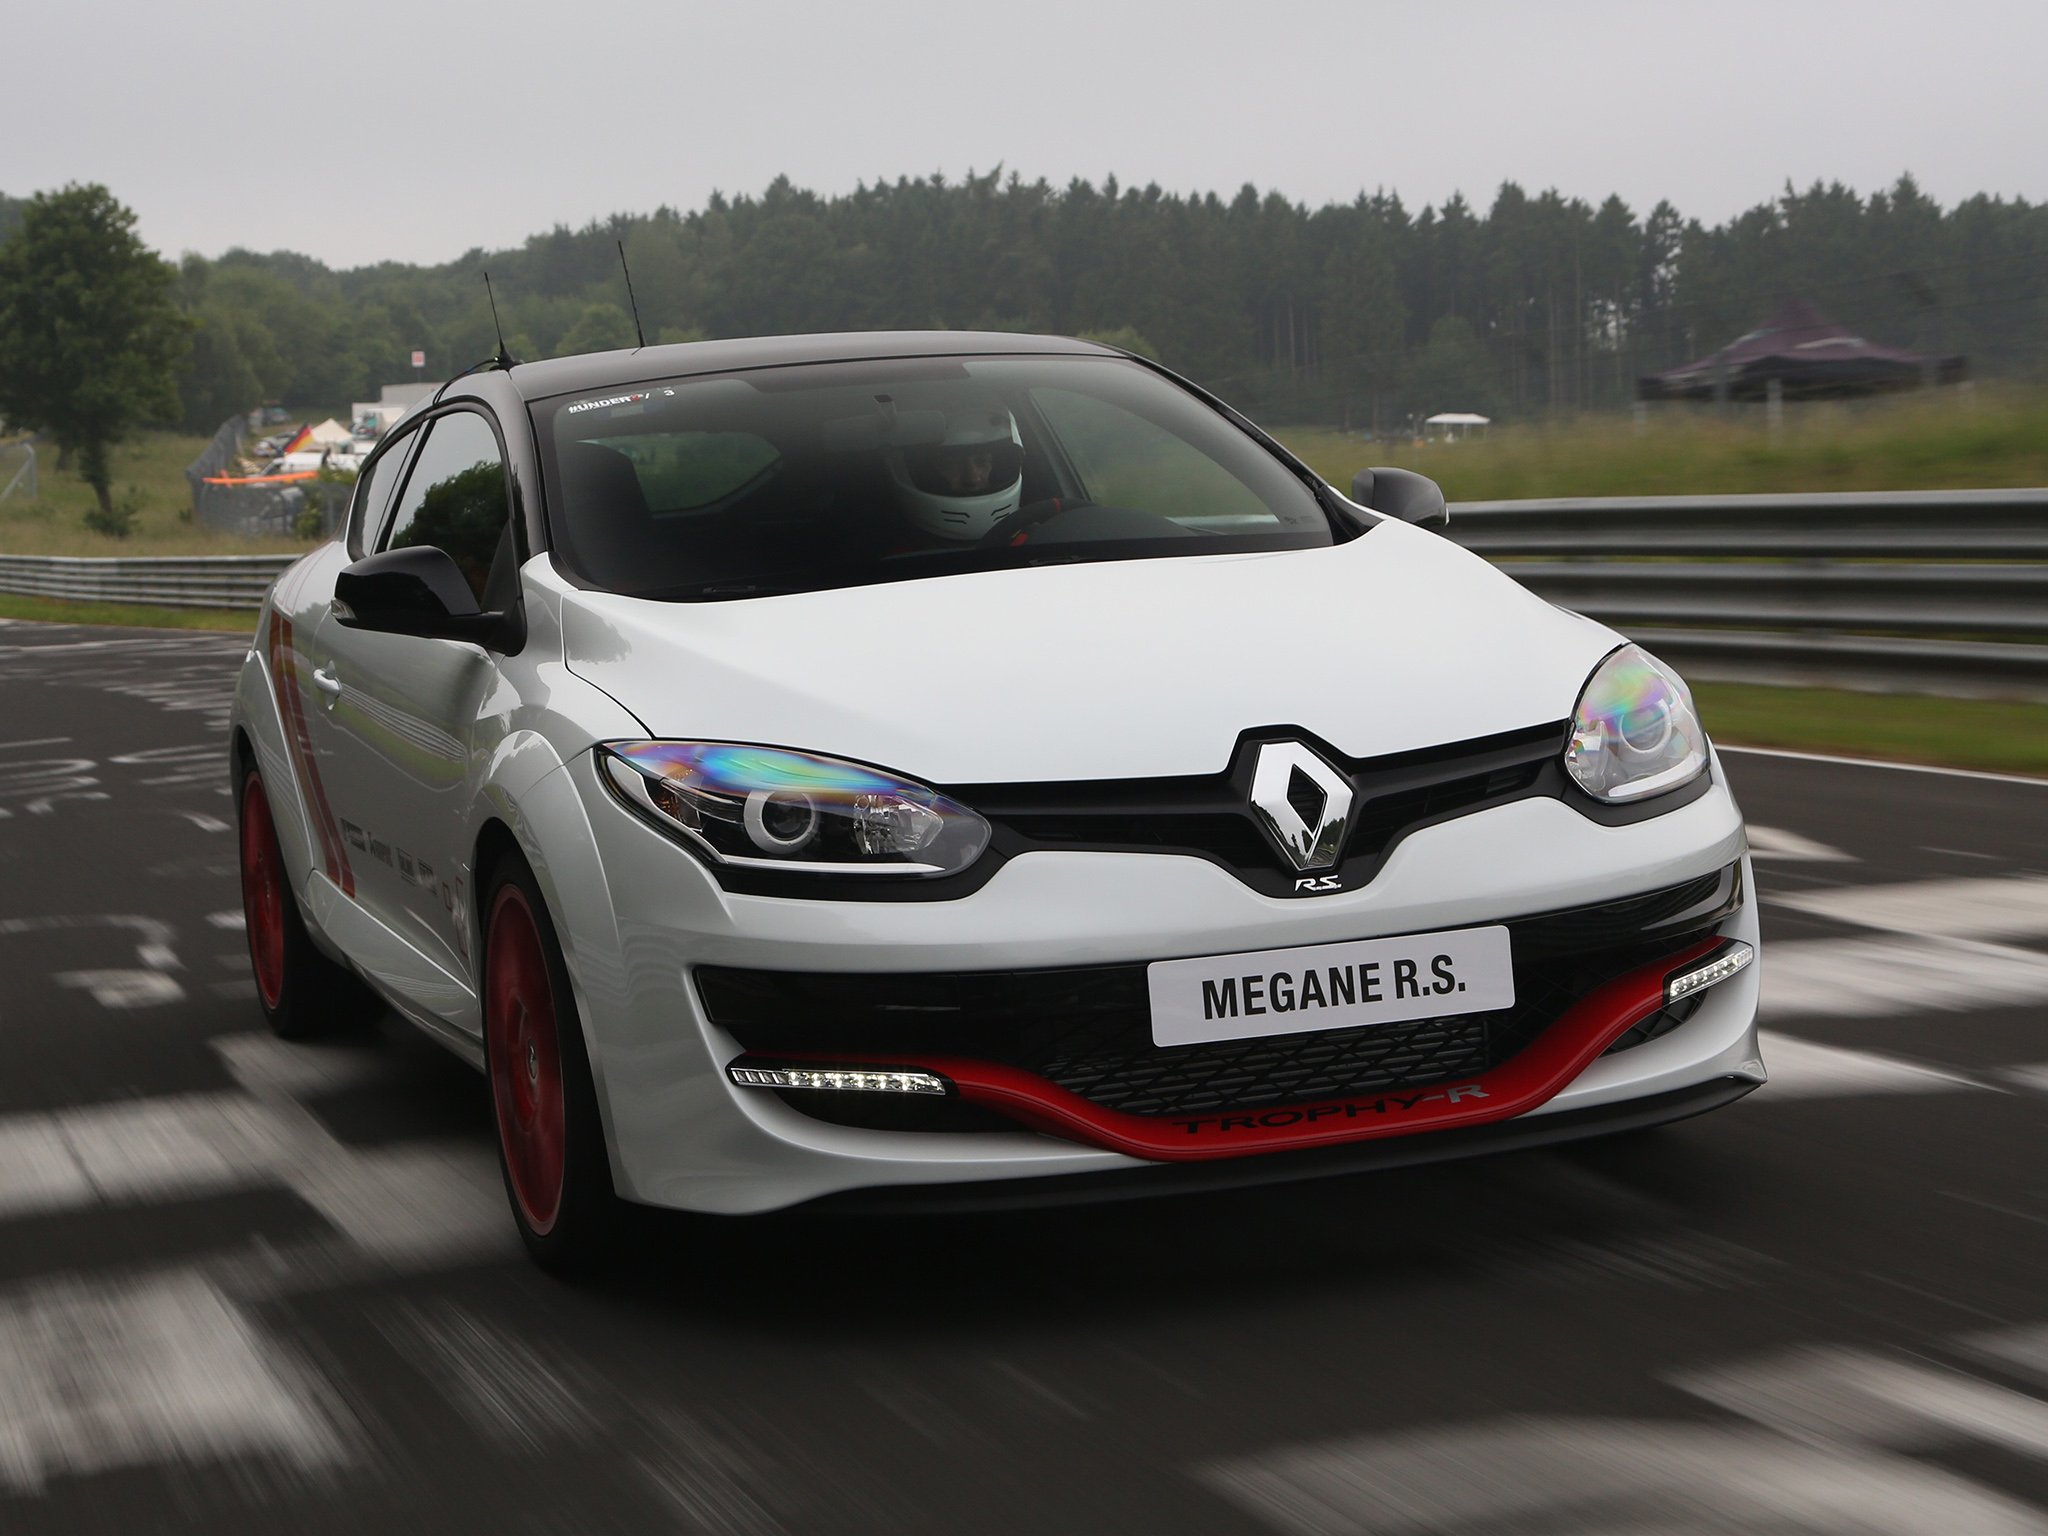 2014, Renault, Megane, R s, , 275, Trophy r, Race, Racing, Tuning Wallpaper